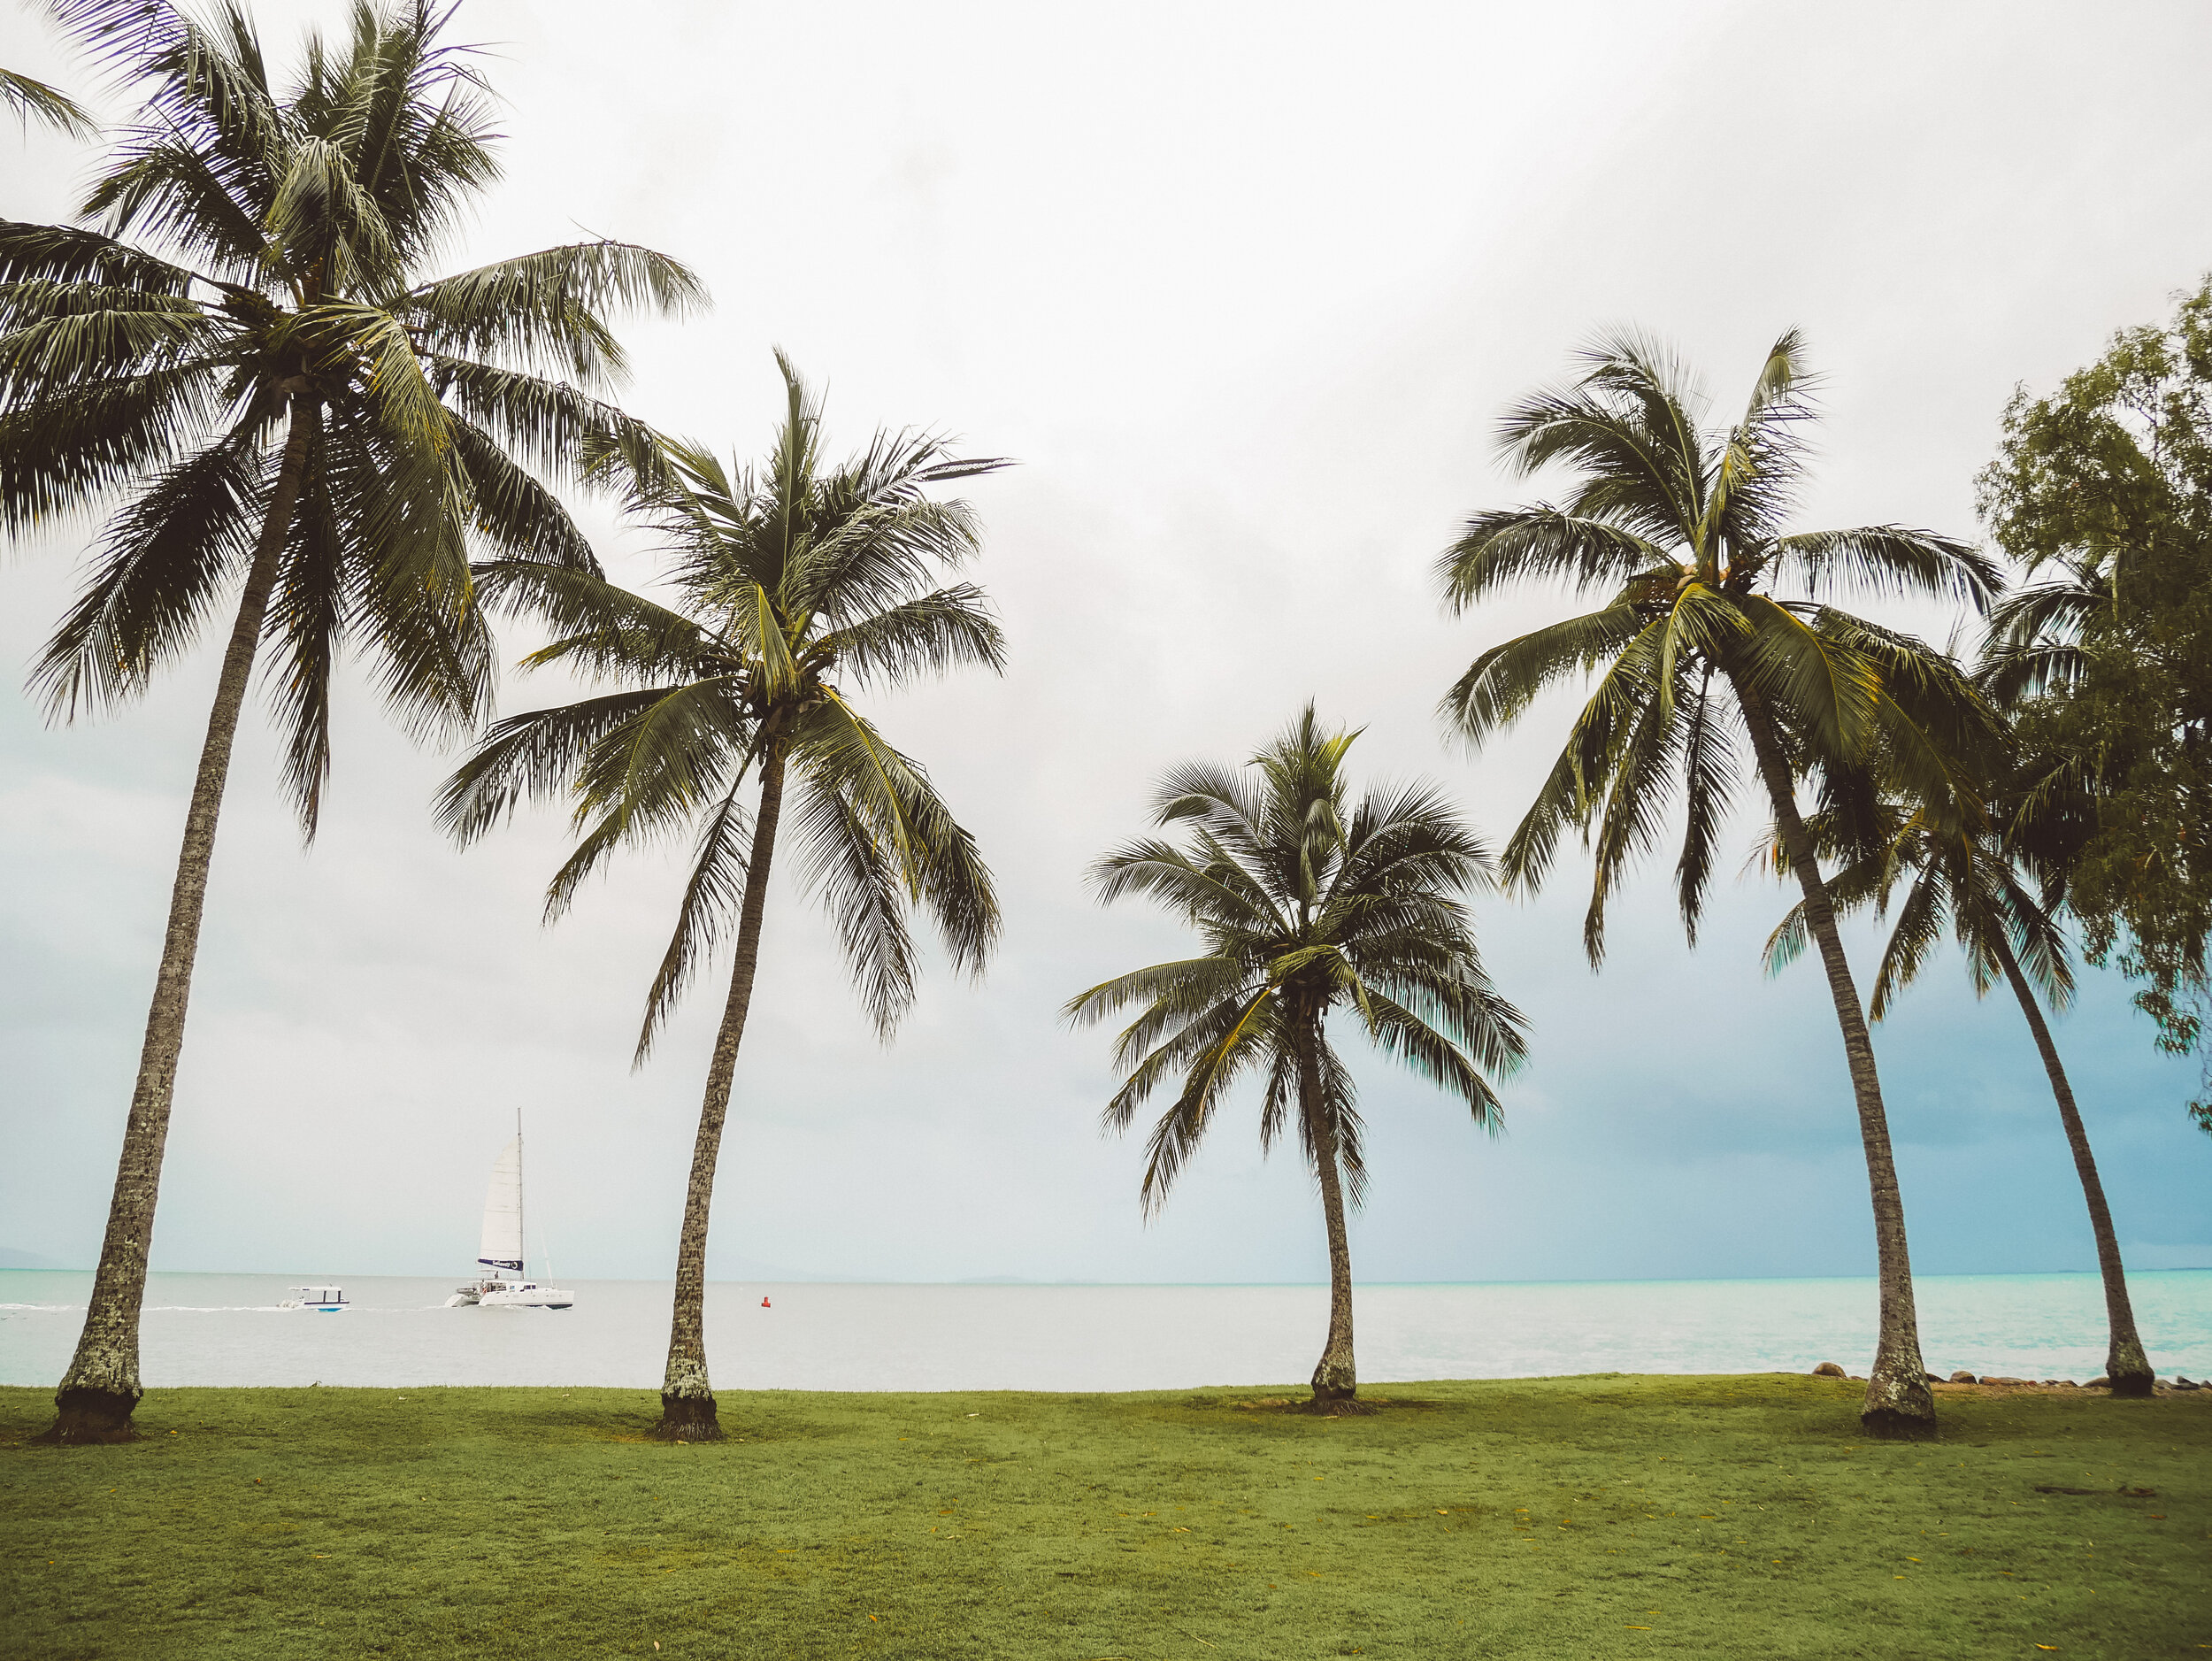 Palm Trees and a sailboat - Rex Smeal Park - Port Douglas - Tropical North Queensland (QLD) - Australia